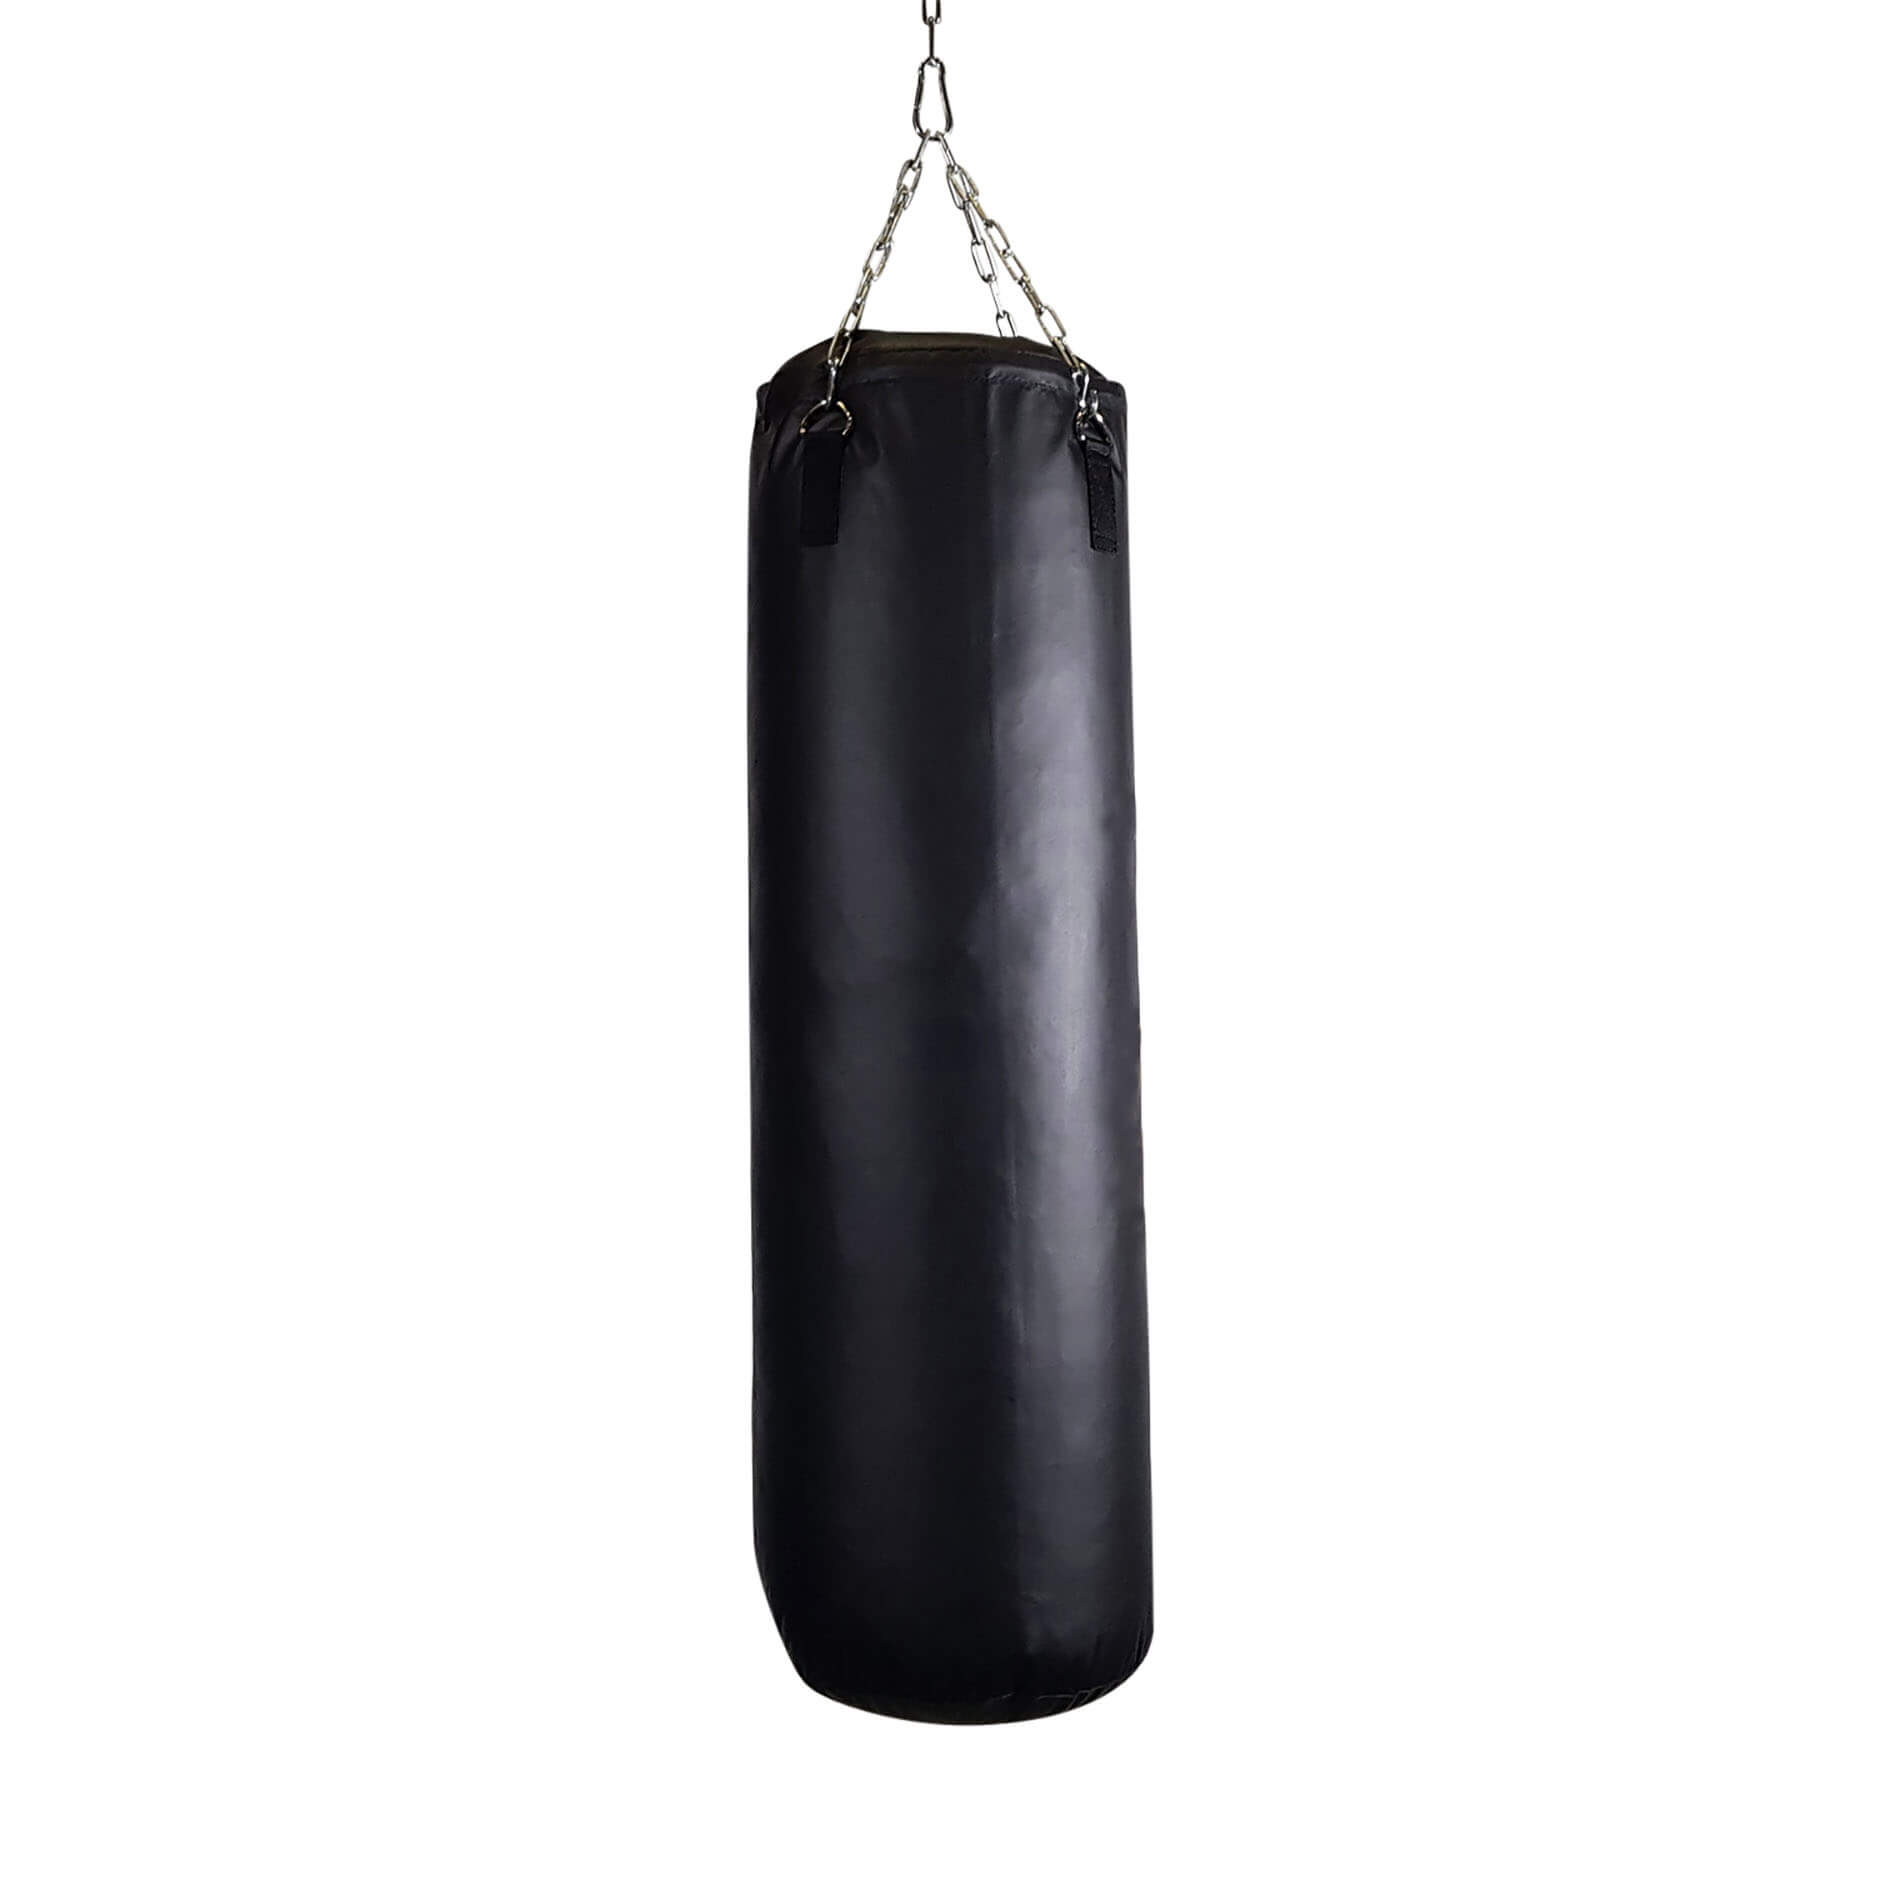 Boxing Clipart Boxing Bag Vector Boxing Punching Bag Eps - Etsy | Boxing punching  bag, Boxing bags, Punching bag